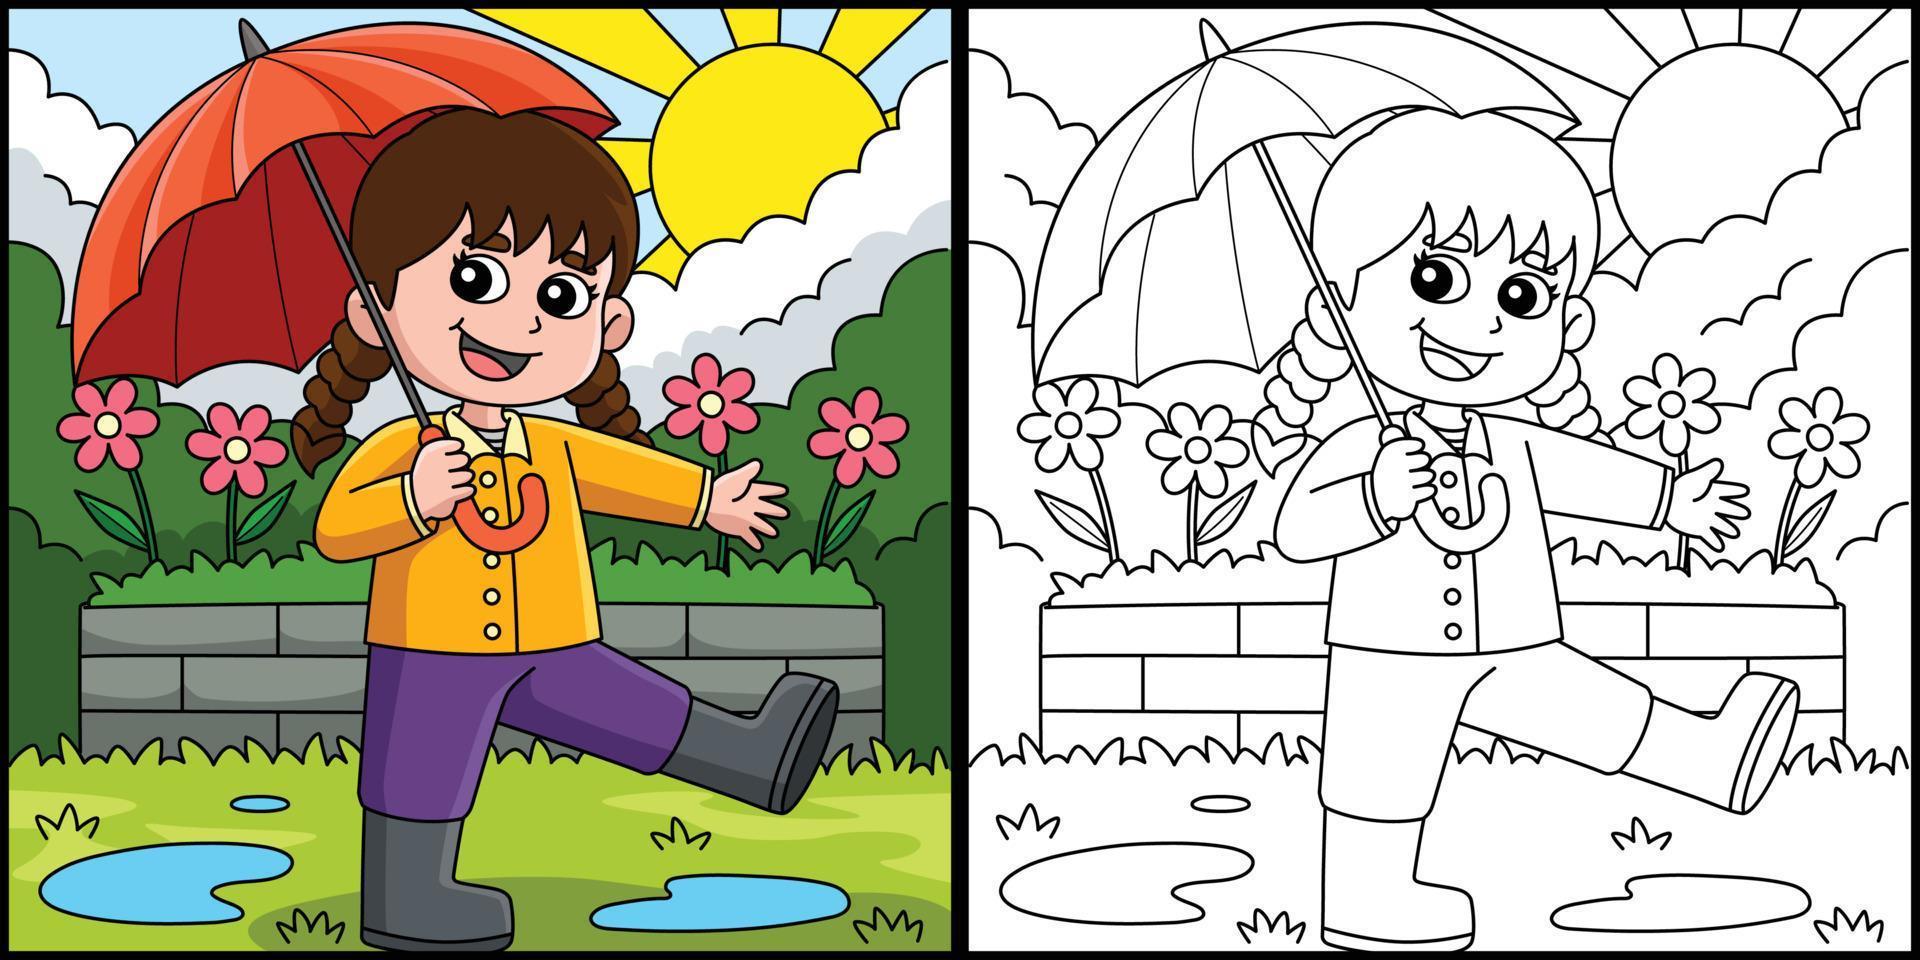 Spring Girl Holding an Umbrella Illustration vector